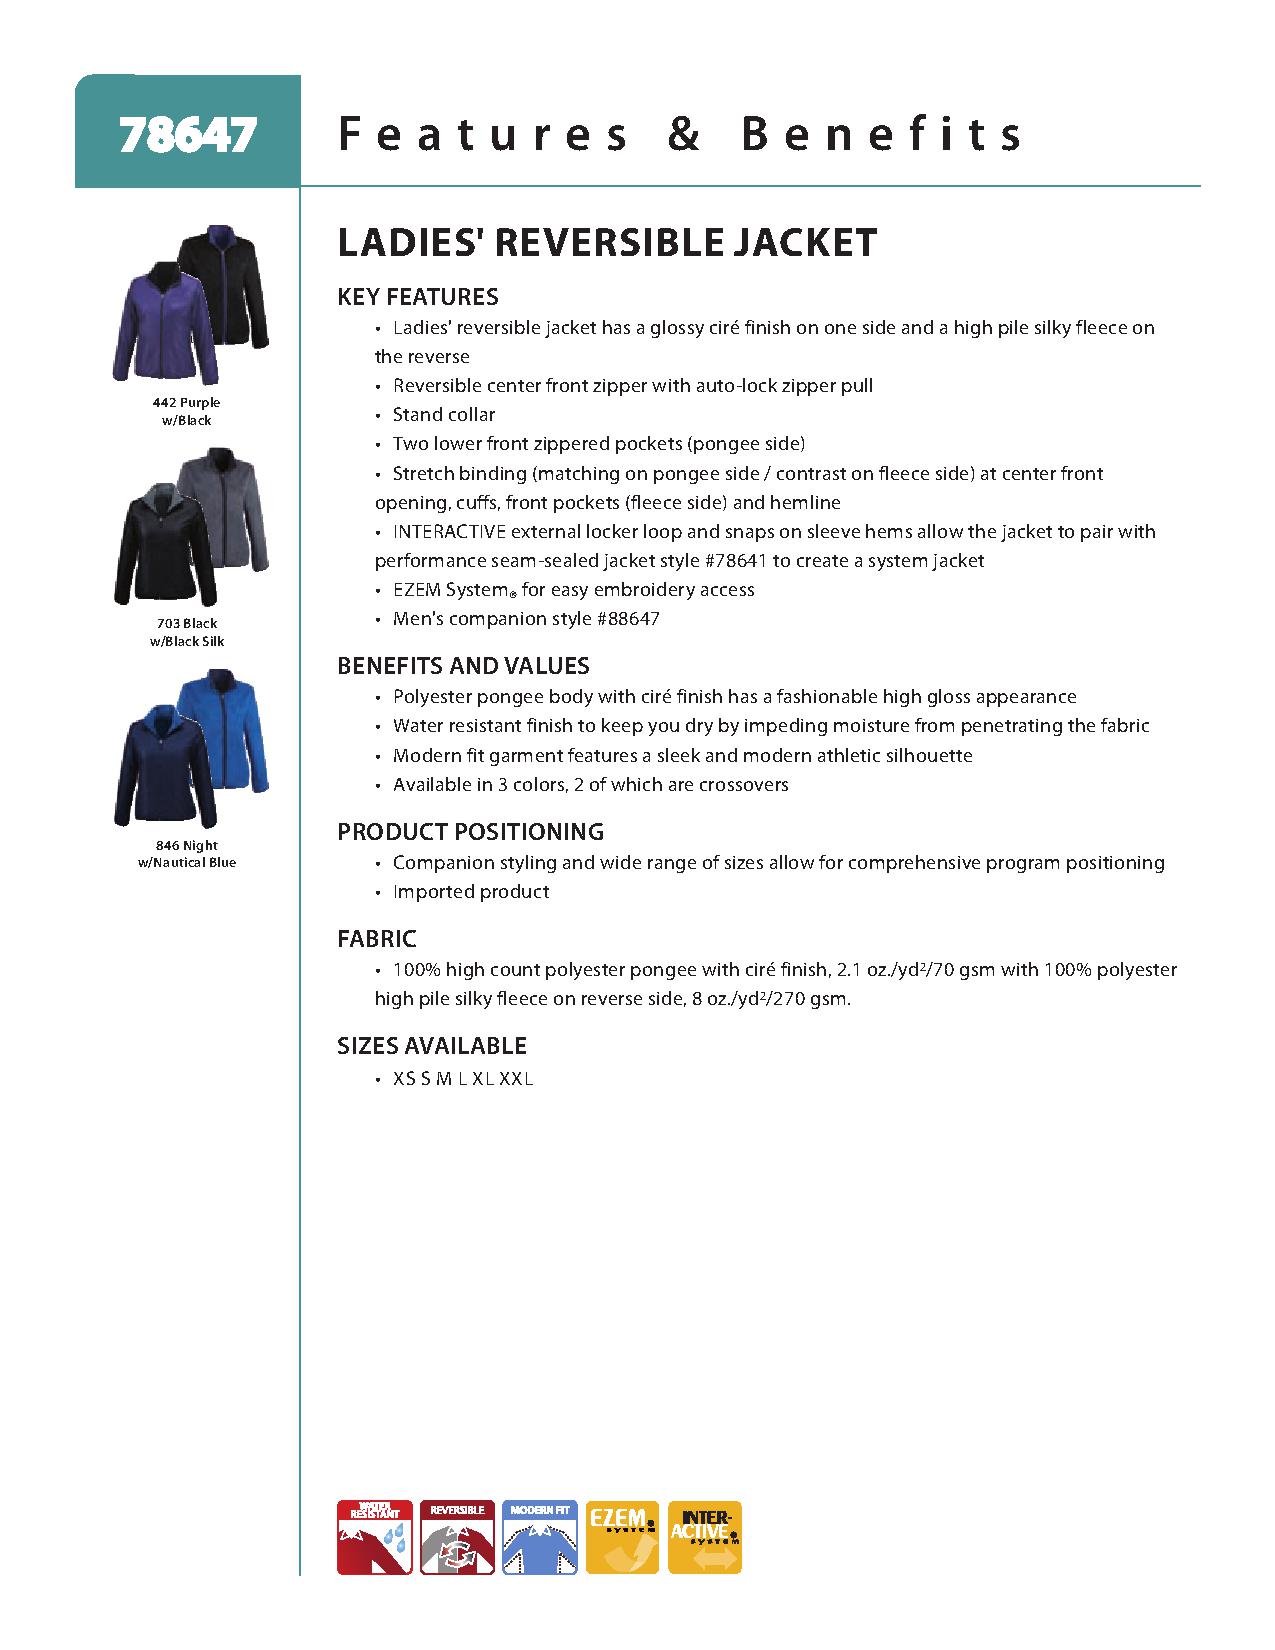 Ash City Reversible Jackets 78647 - Ladies' Reversible Jacket